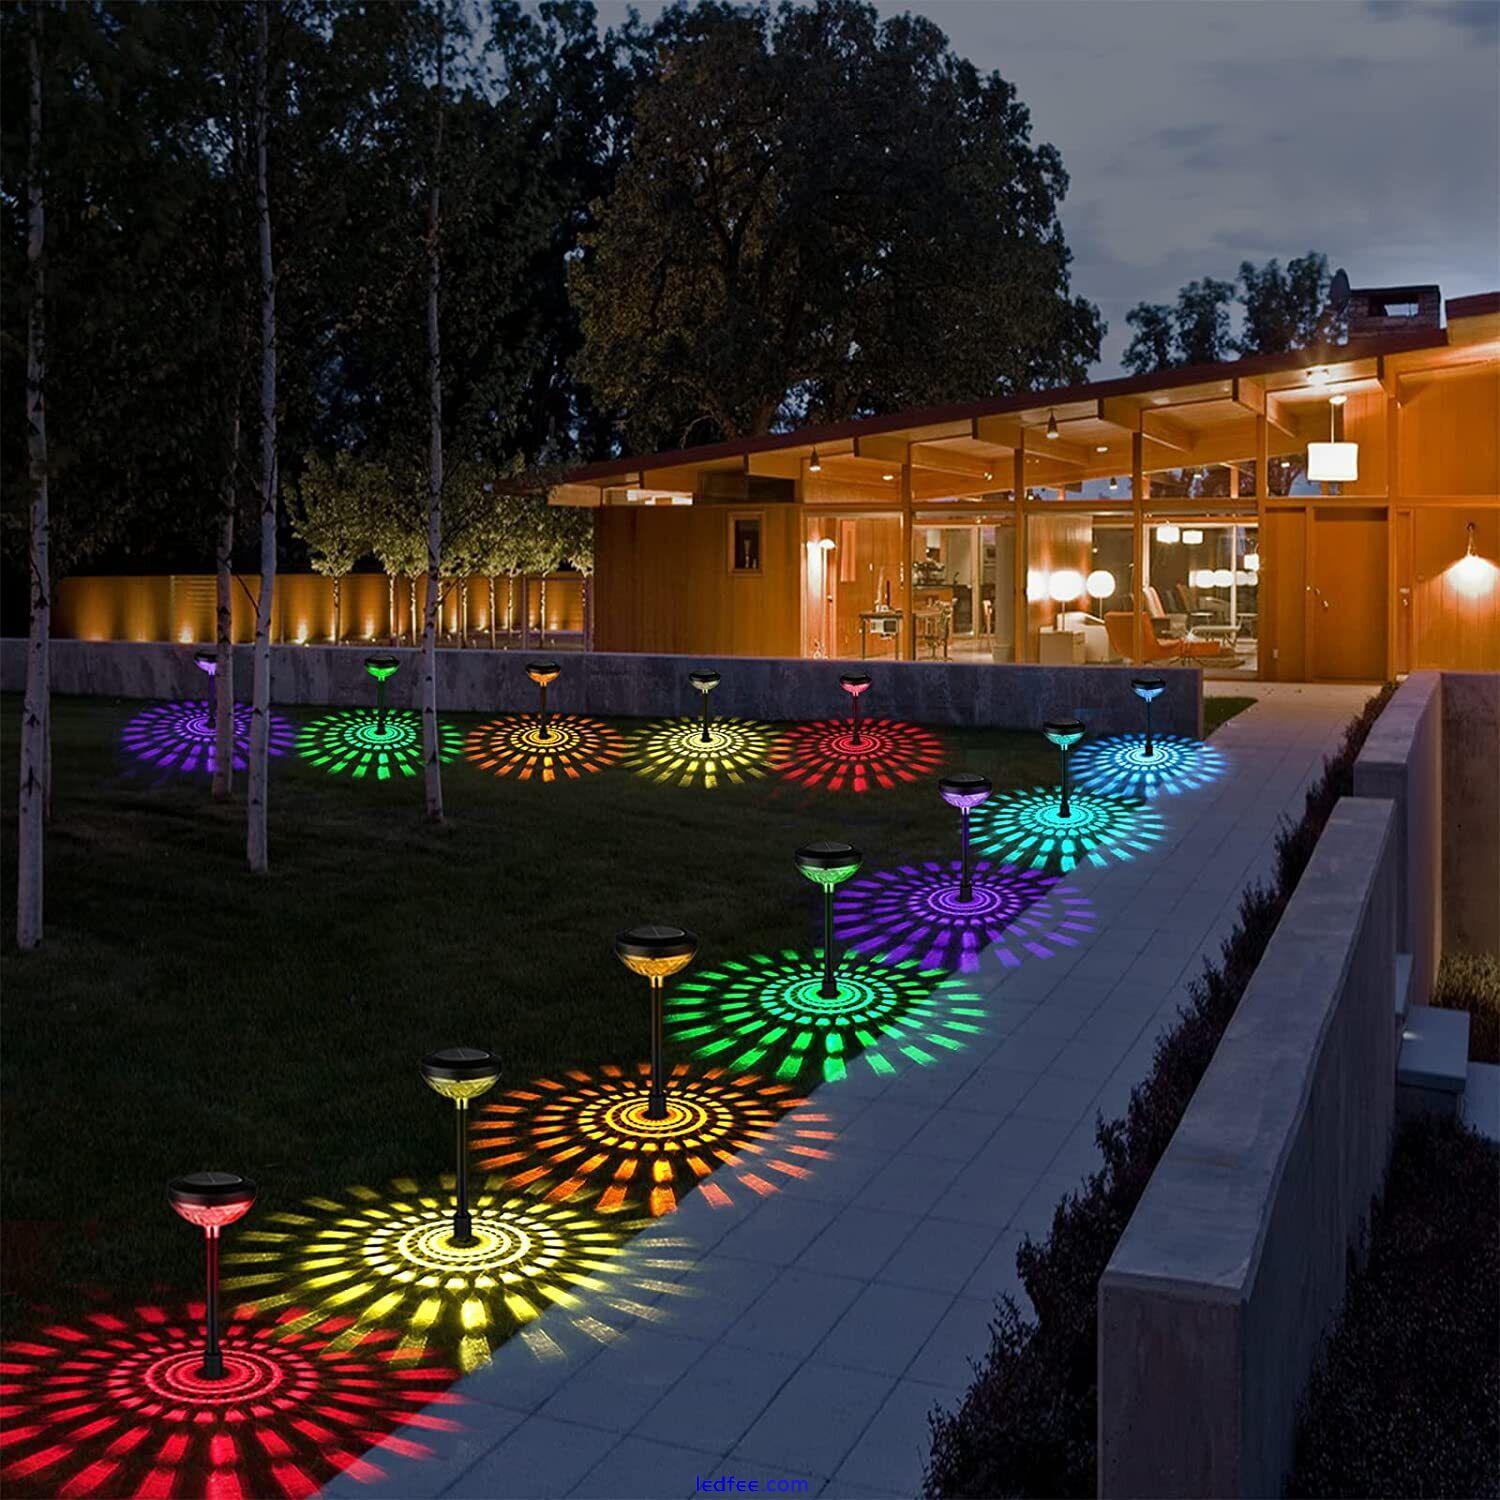 1/2Pack Solar Pathway Lights Outdoor Walkway Yard Backyard Lawn Landscape Decor 4 